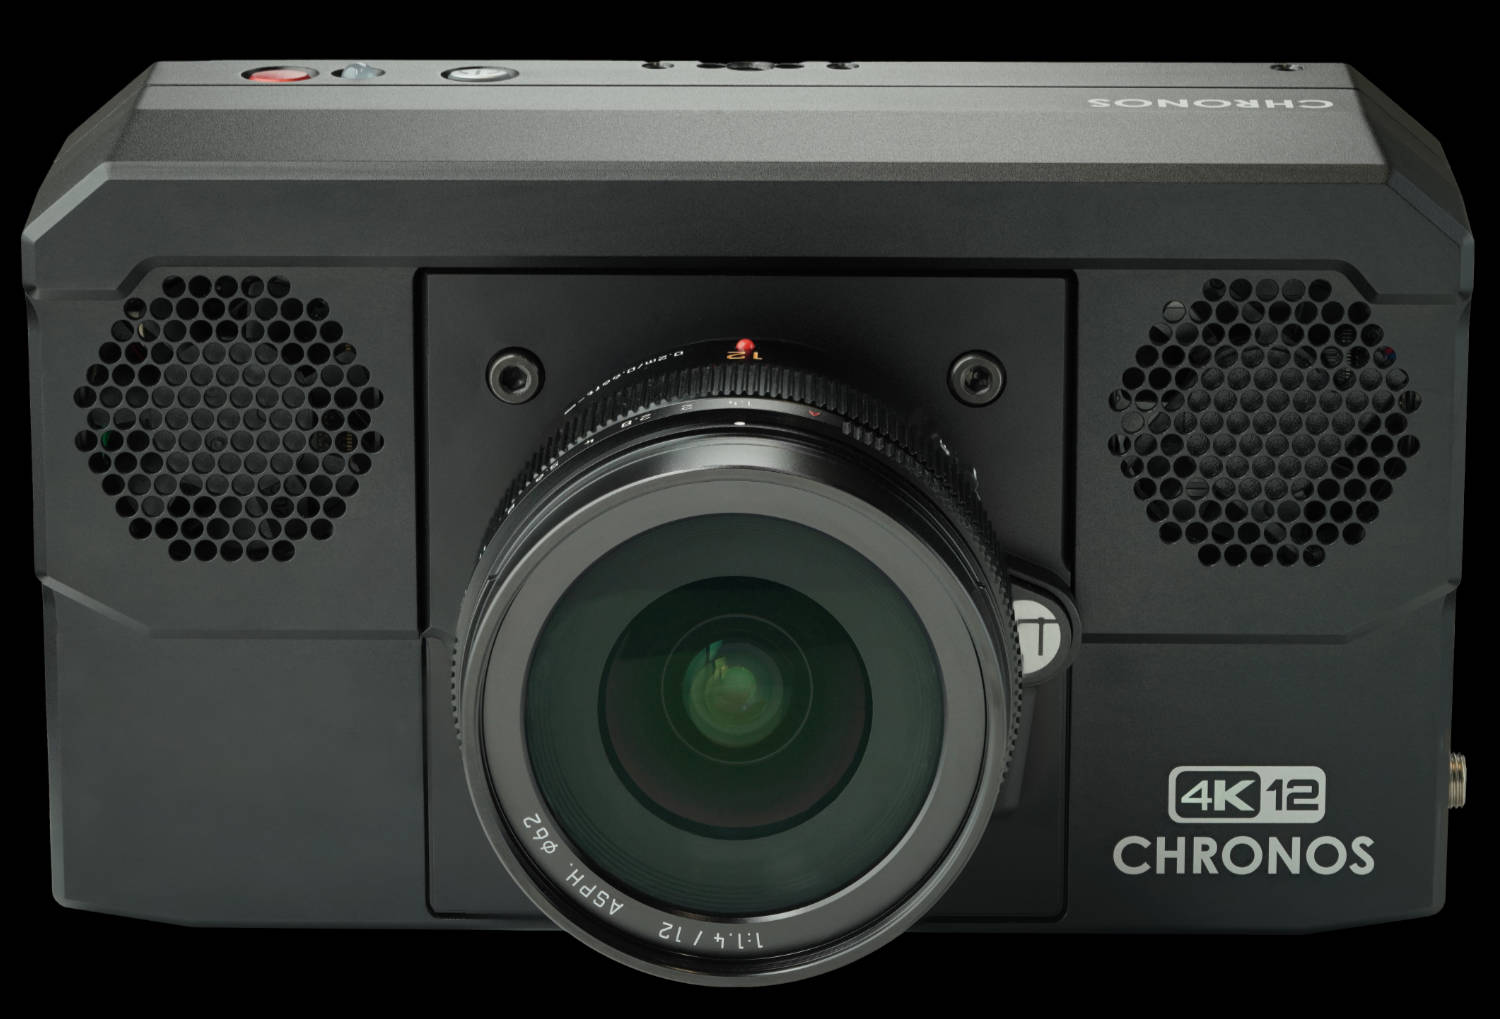 chronos-4k12-front-black-focus